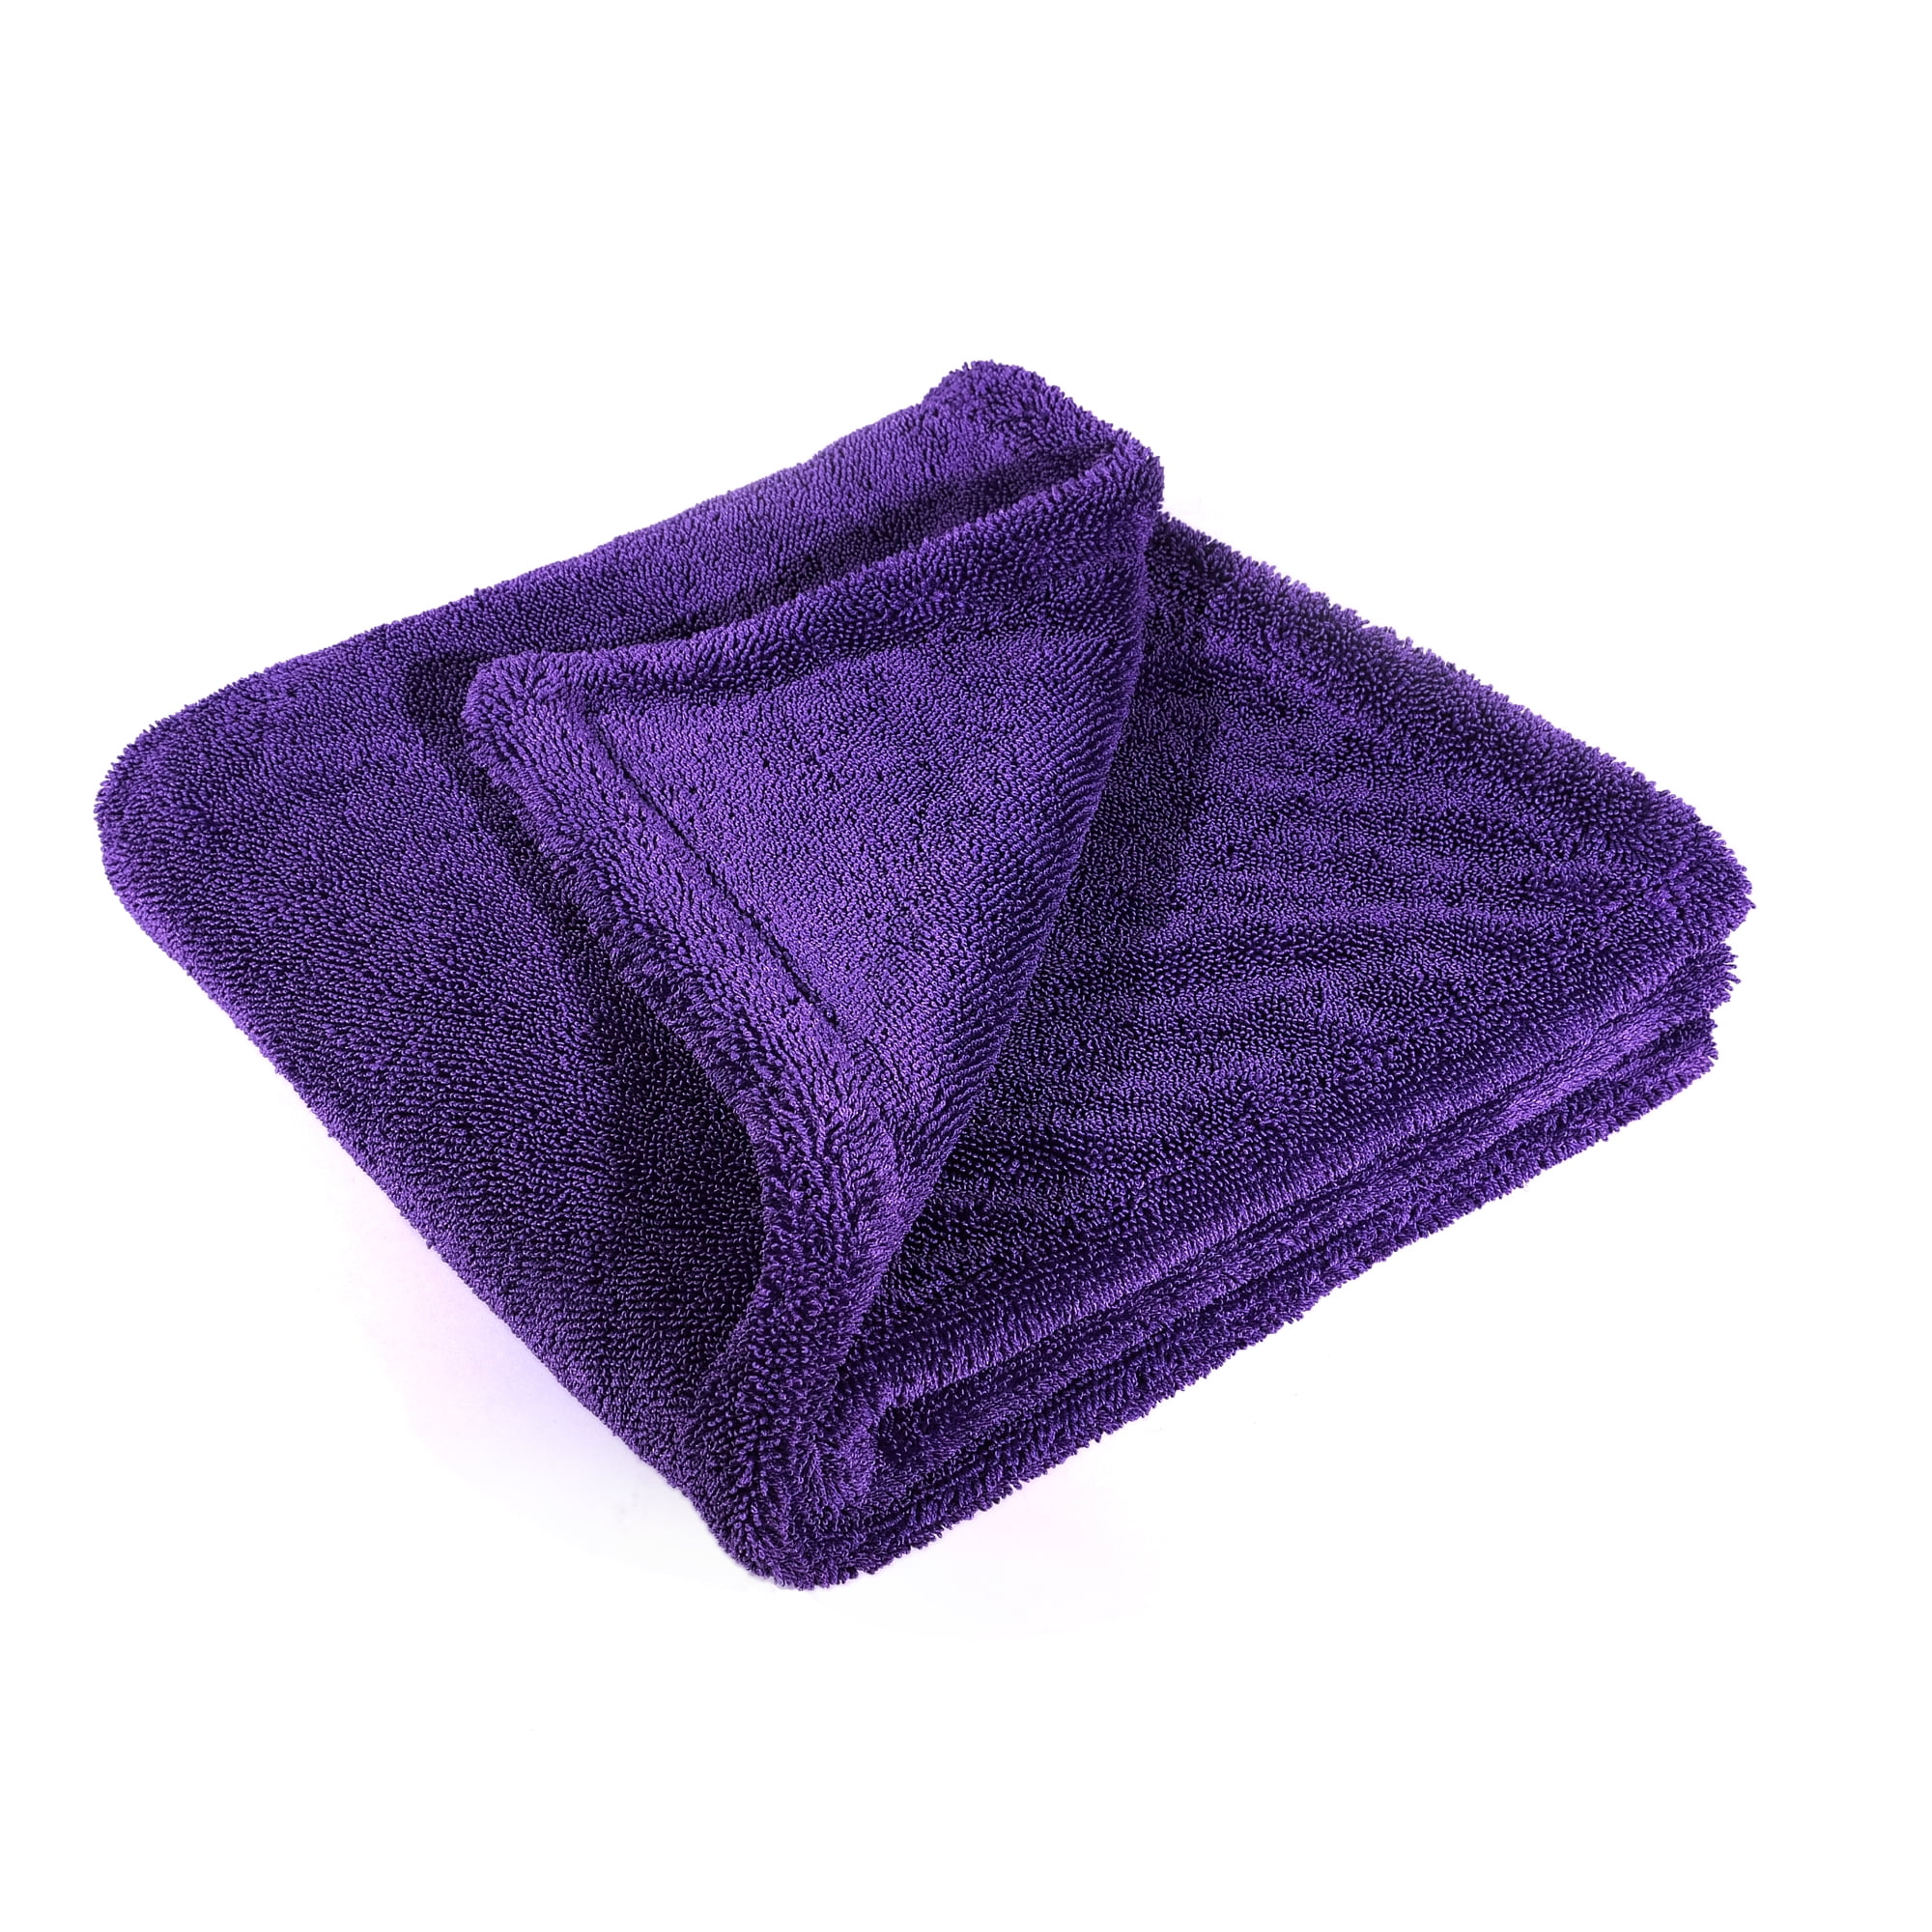 GT Twist Microfiber Car Drying Towel – GT Shine